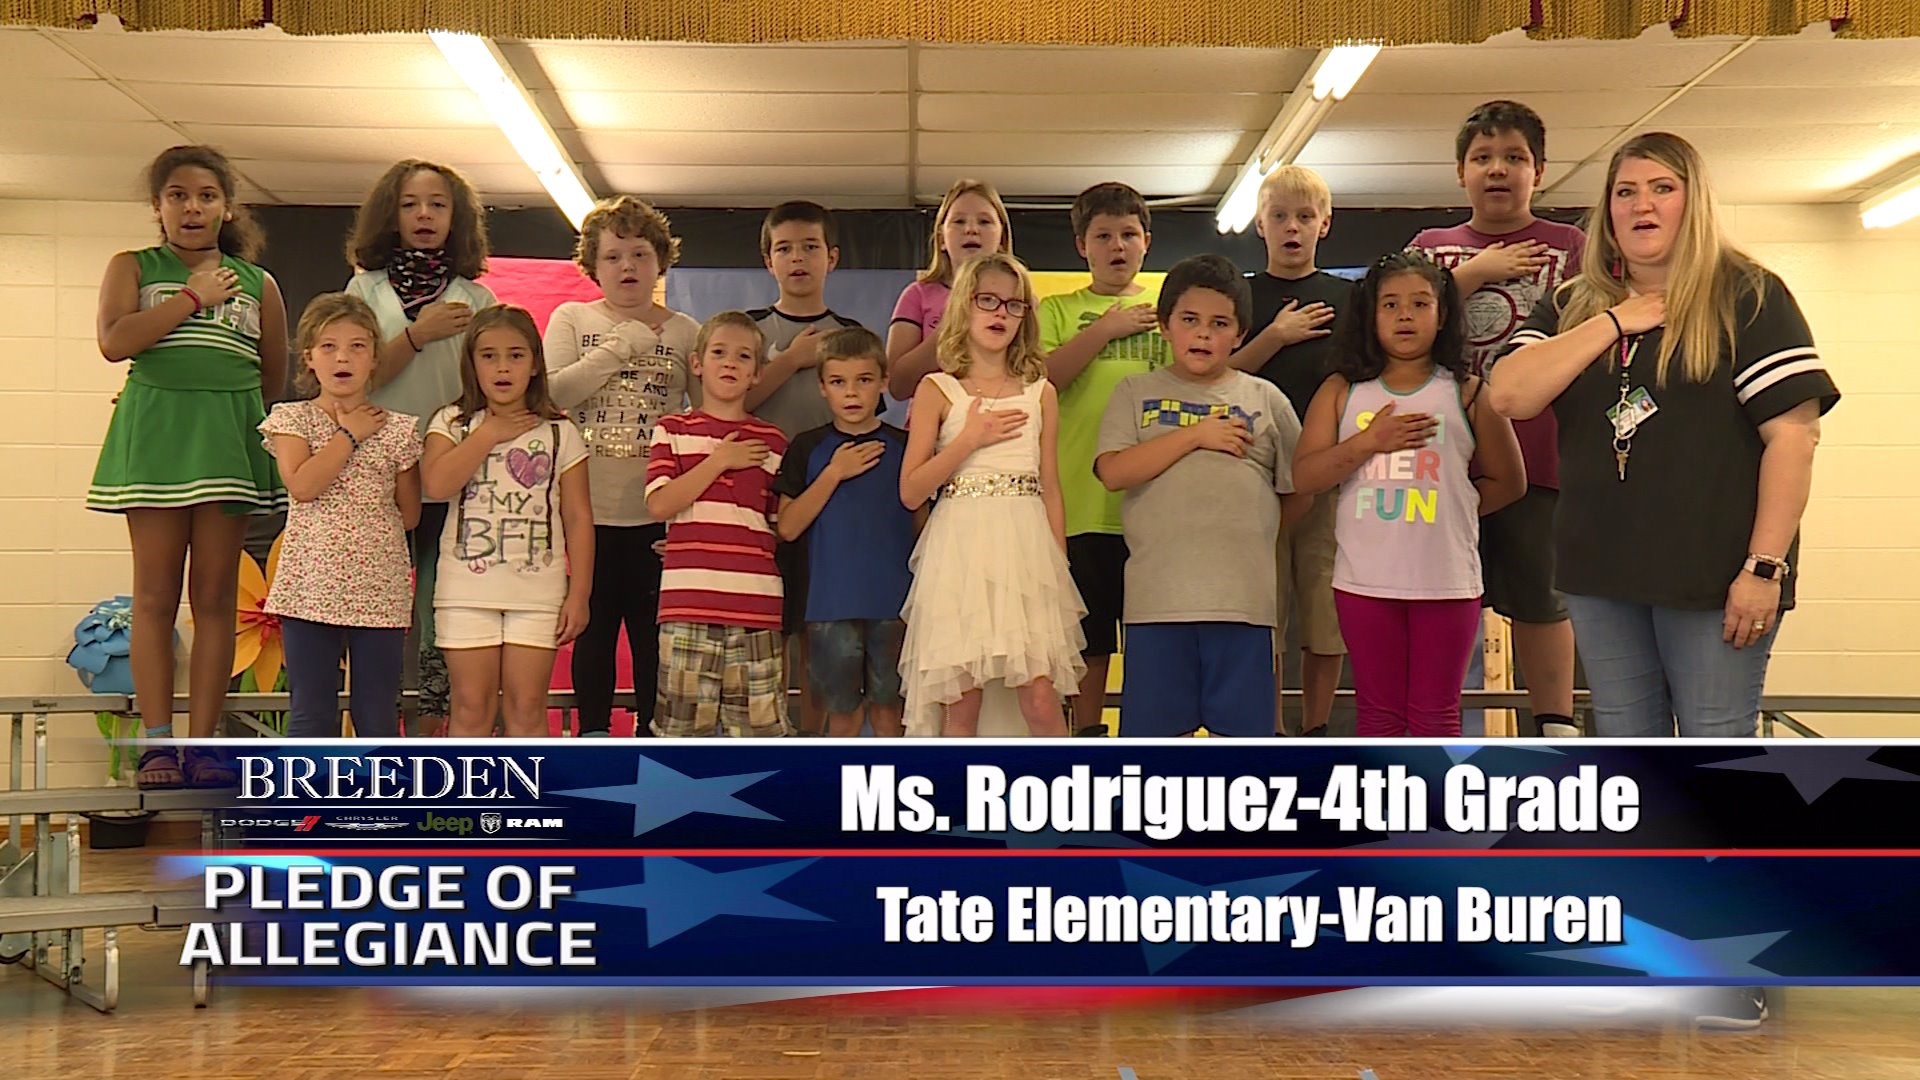 Ms. Rodriguez  4th Grade Tate Elementary, Van Buren